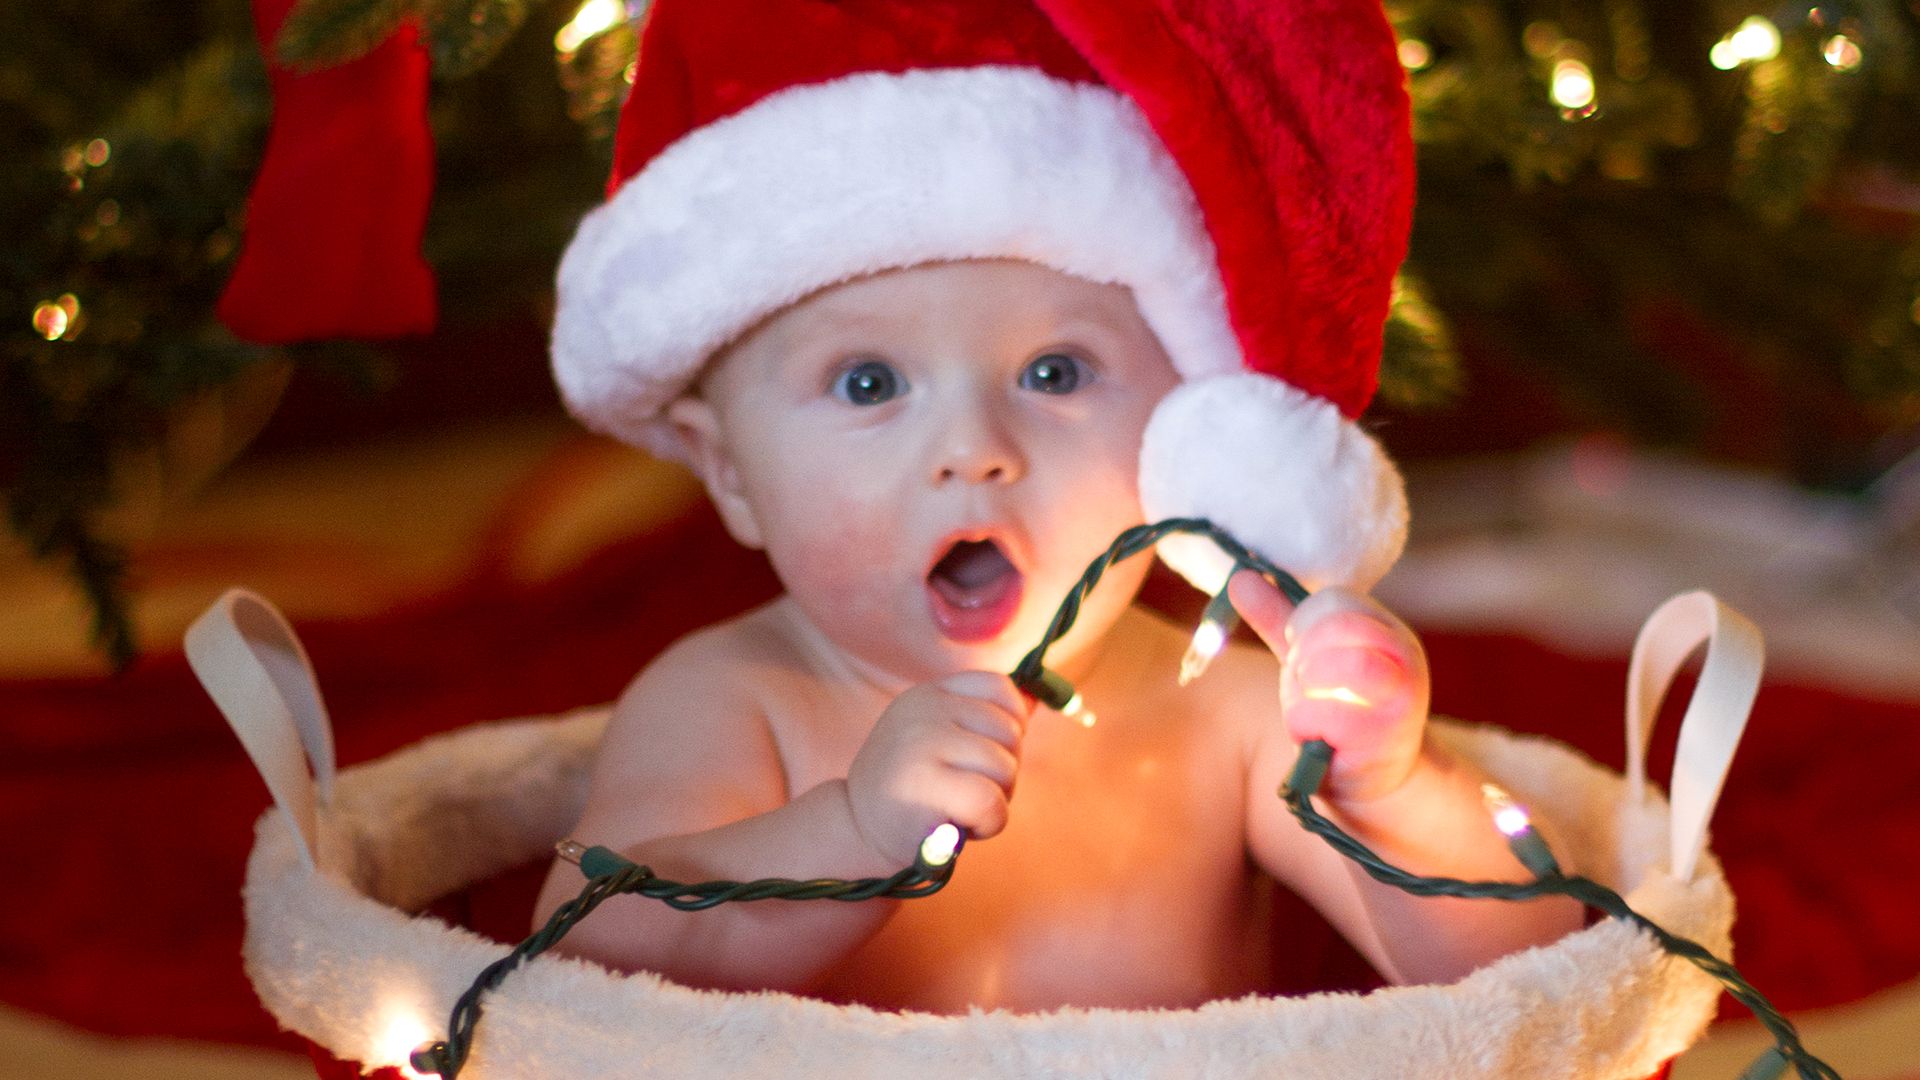 Santa, baby! Enjoy these adorable holiday cuties